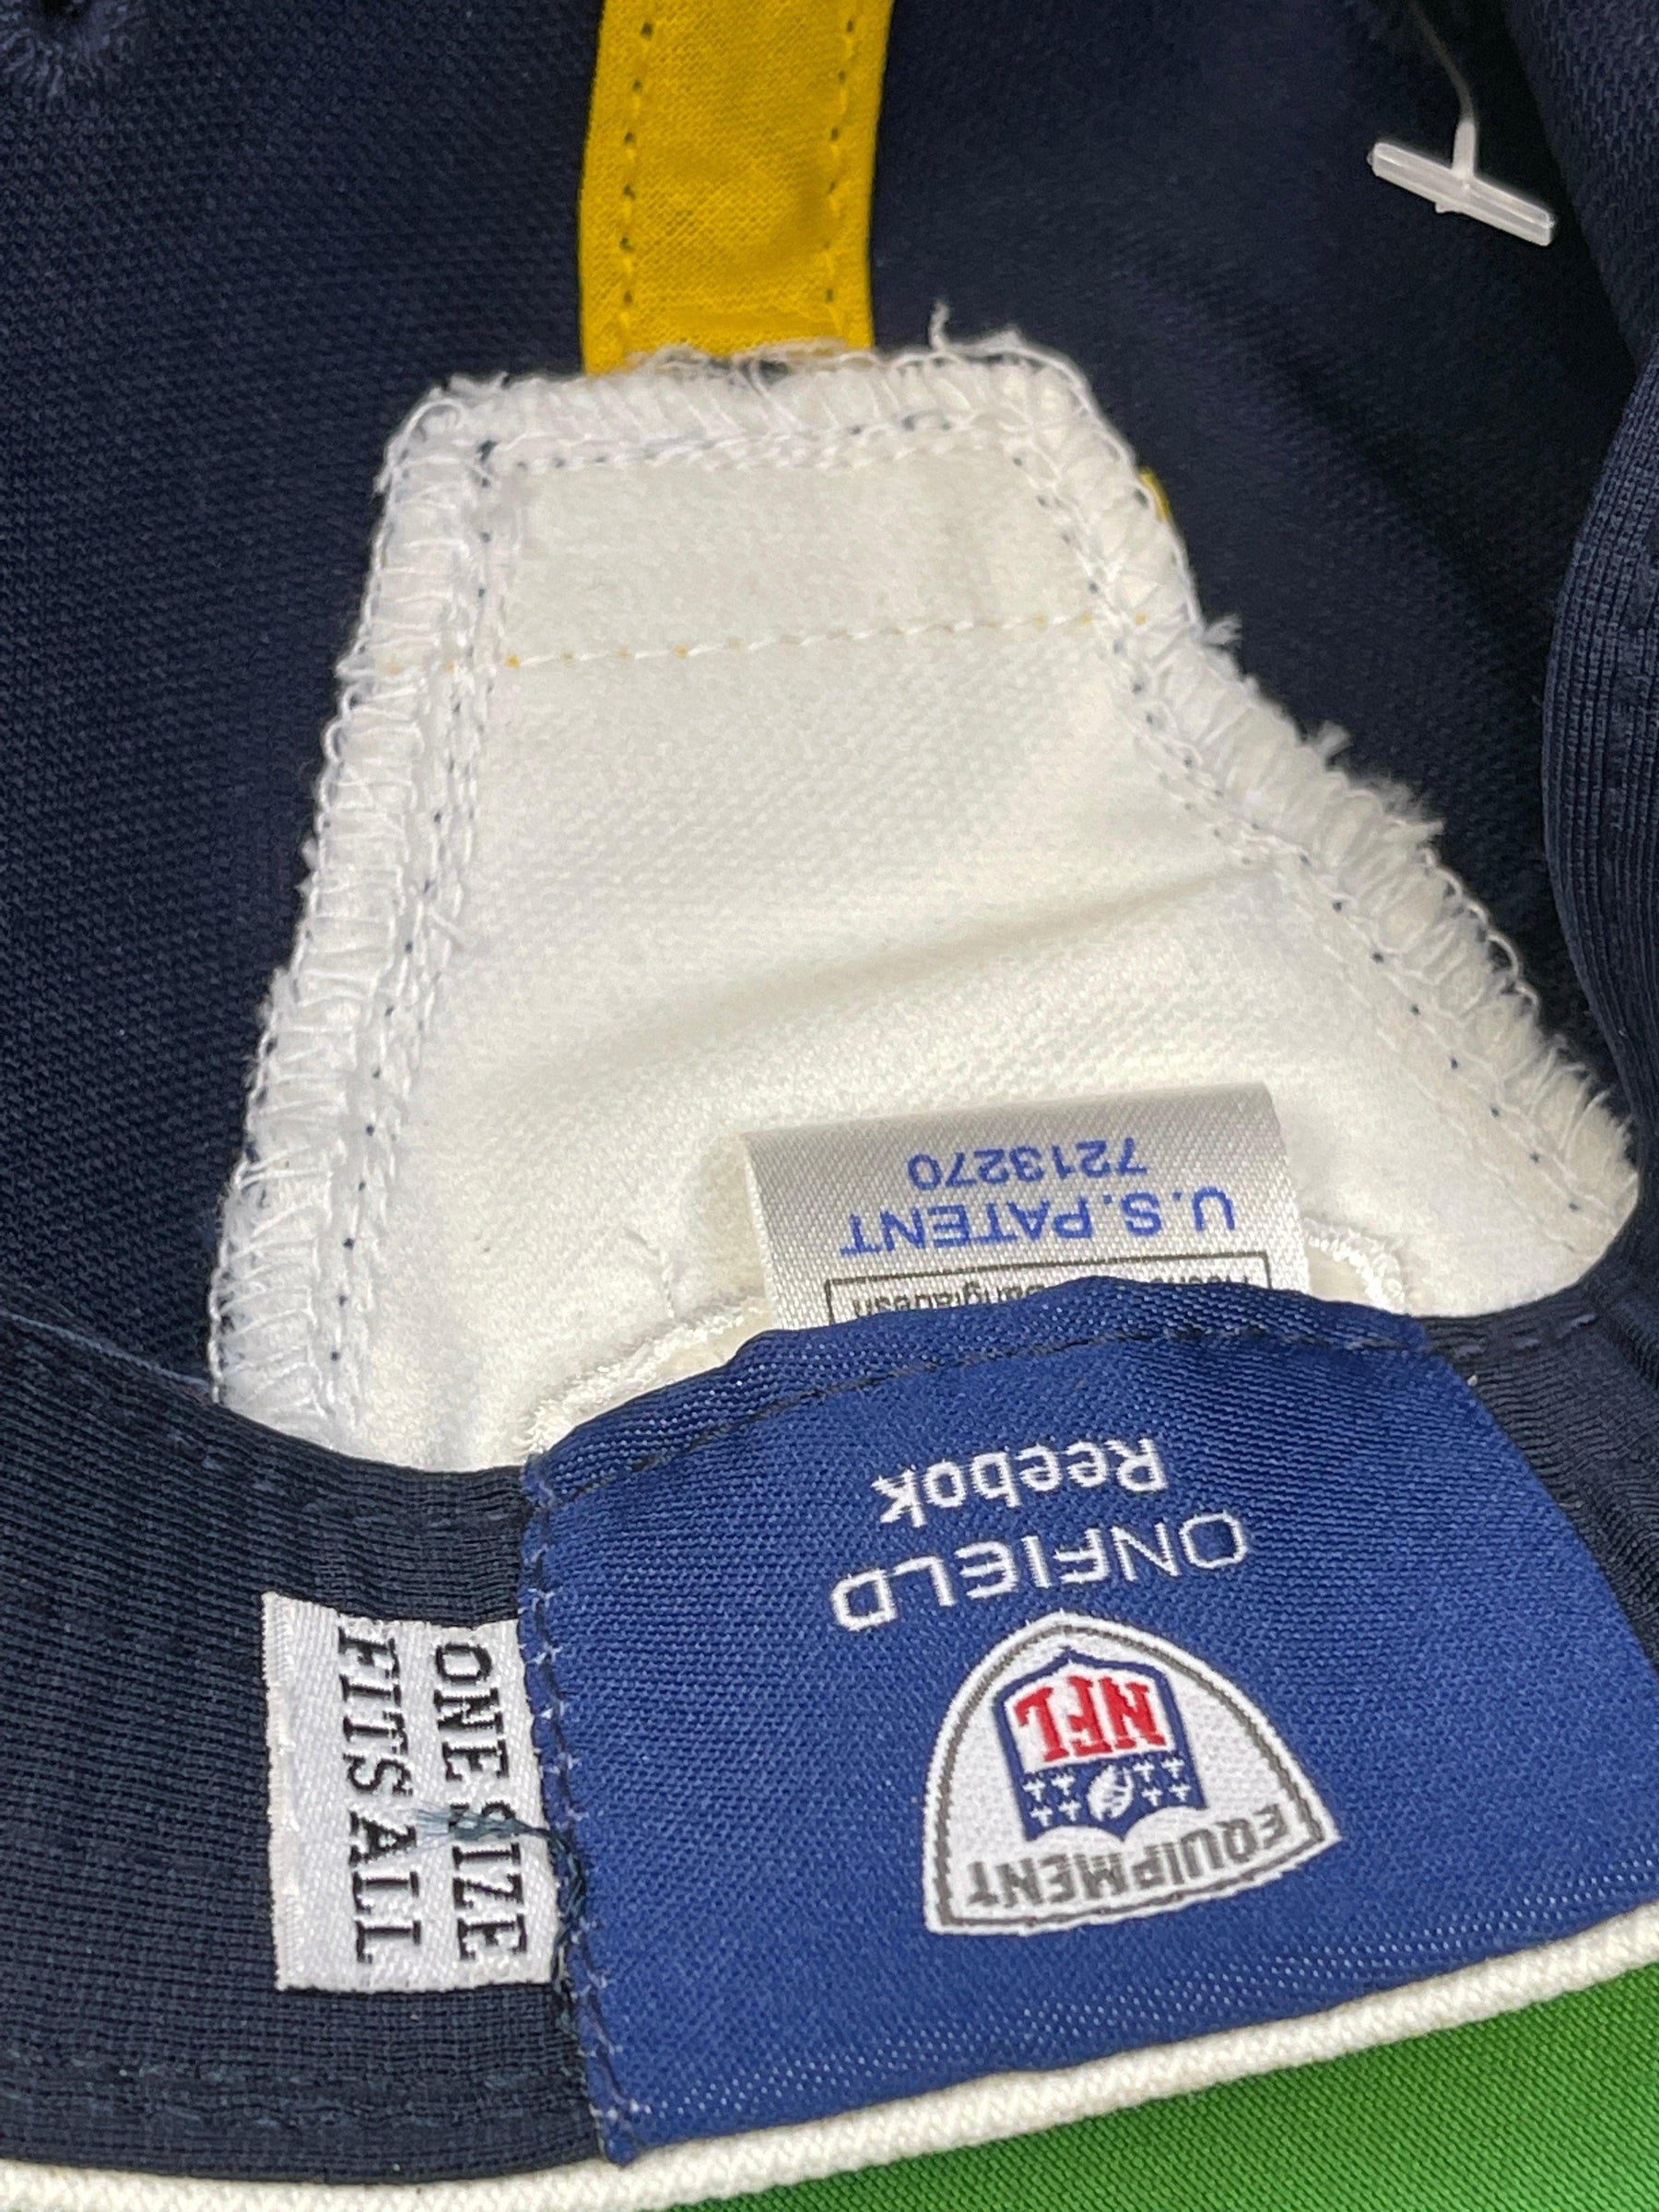 NFL Los Angeles Chargers Reebok Vintage Baseball Cap/Hat Men's Women's OSFA